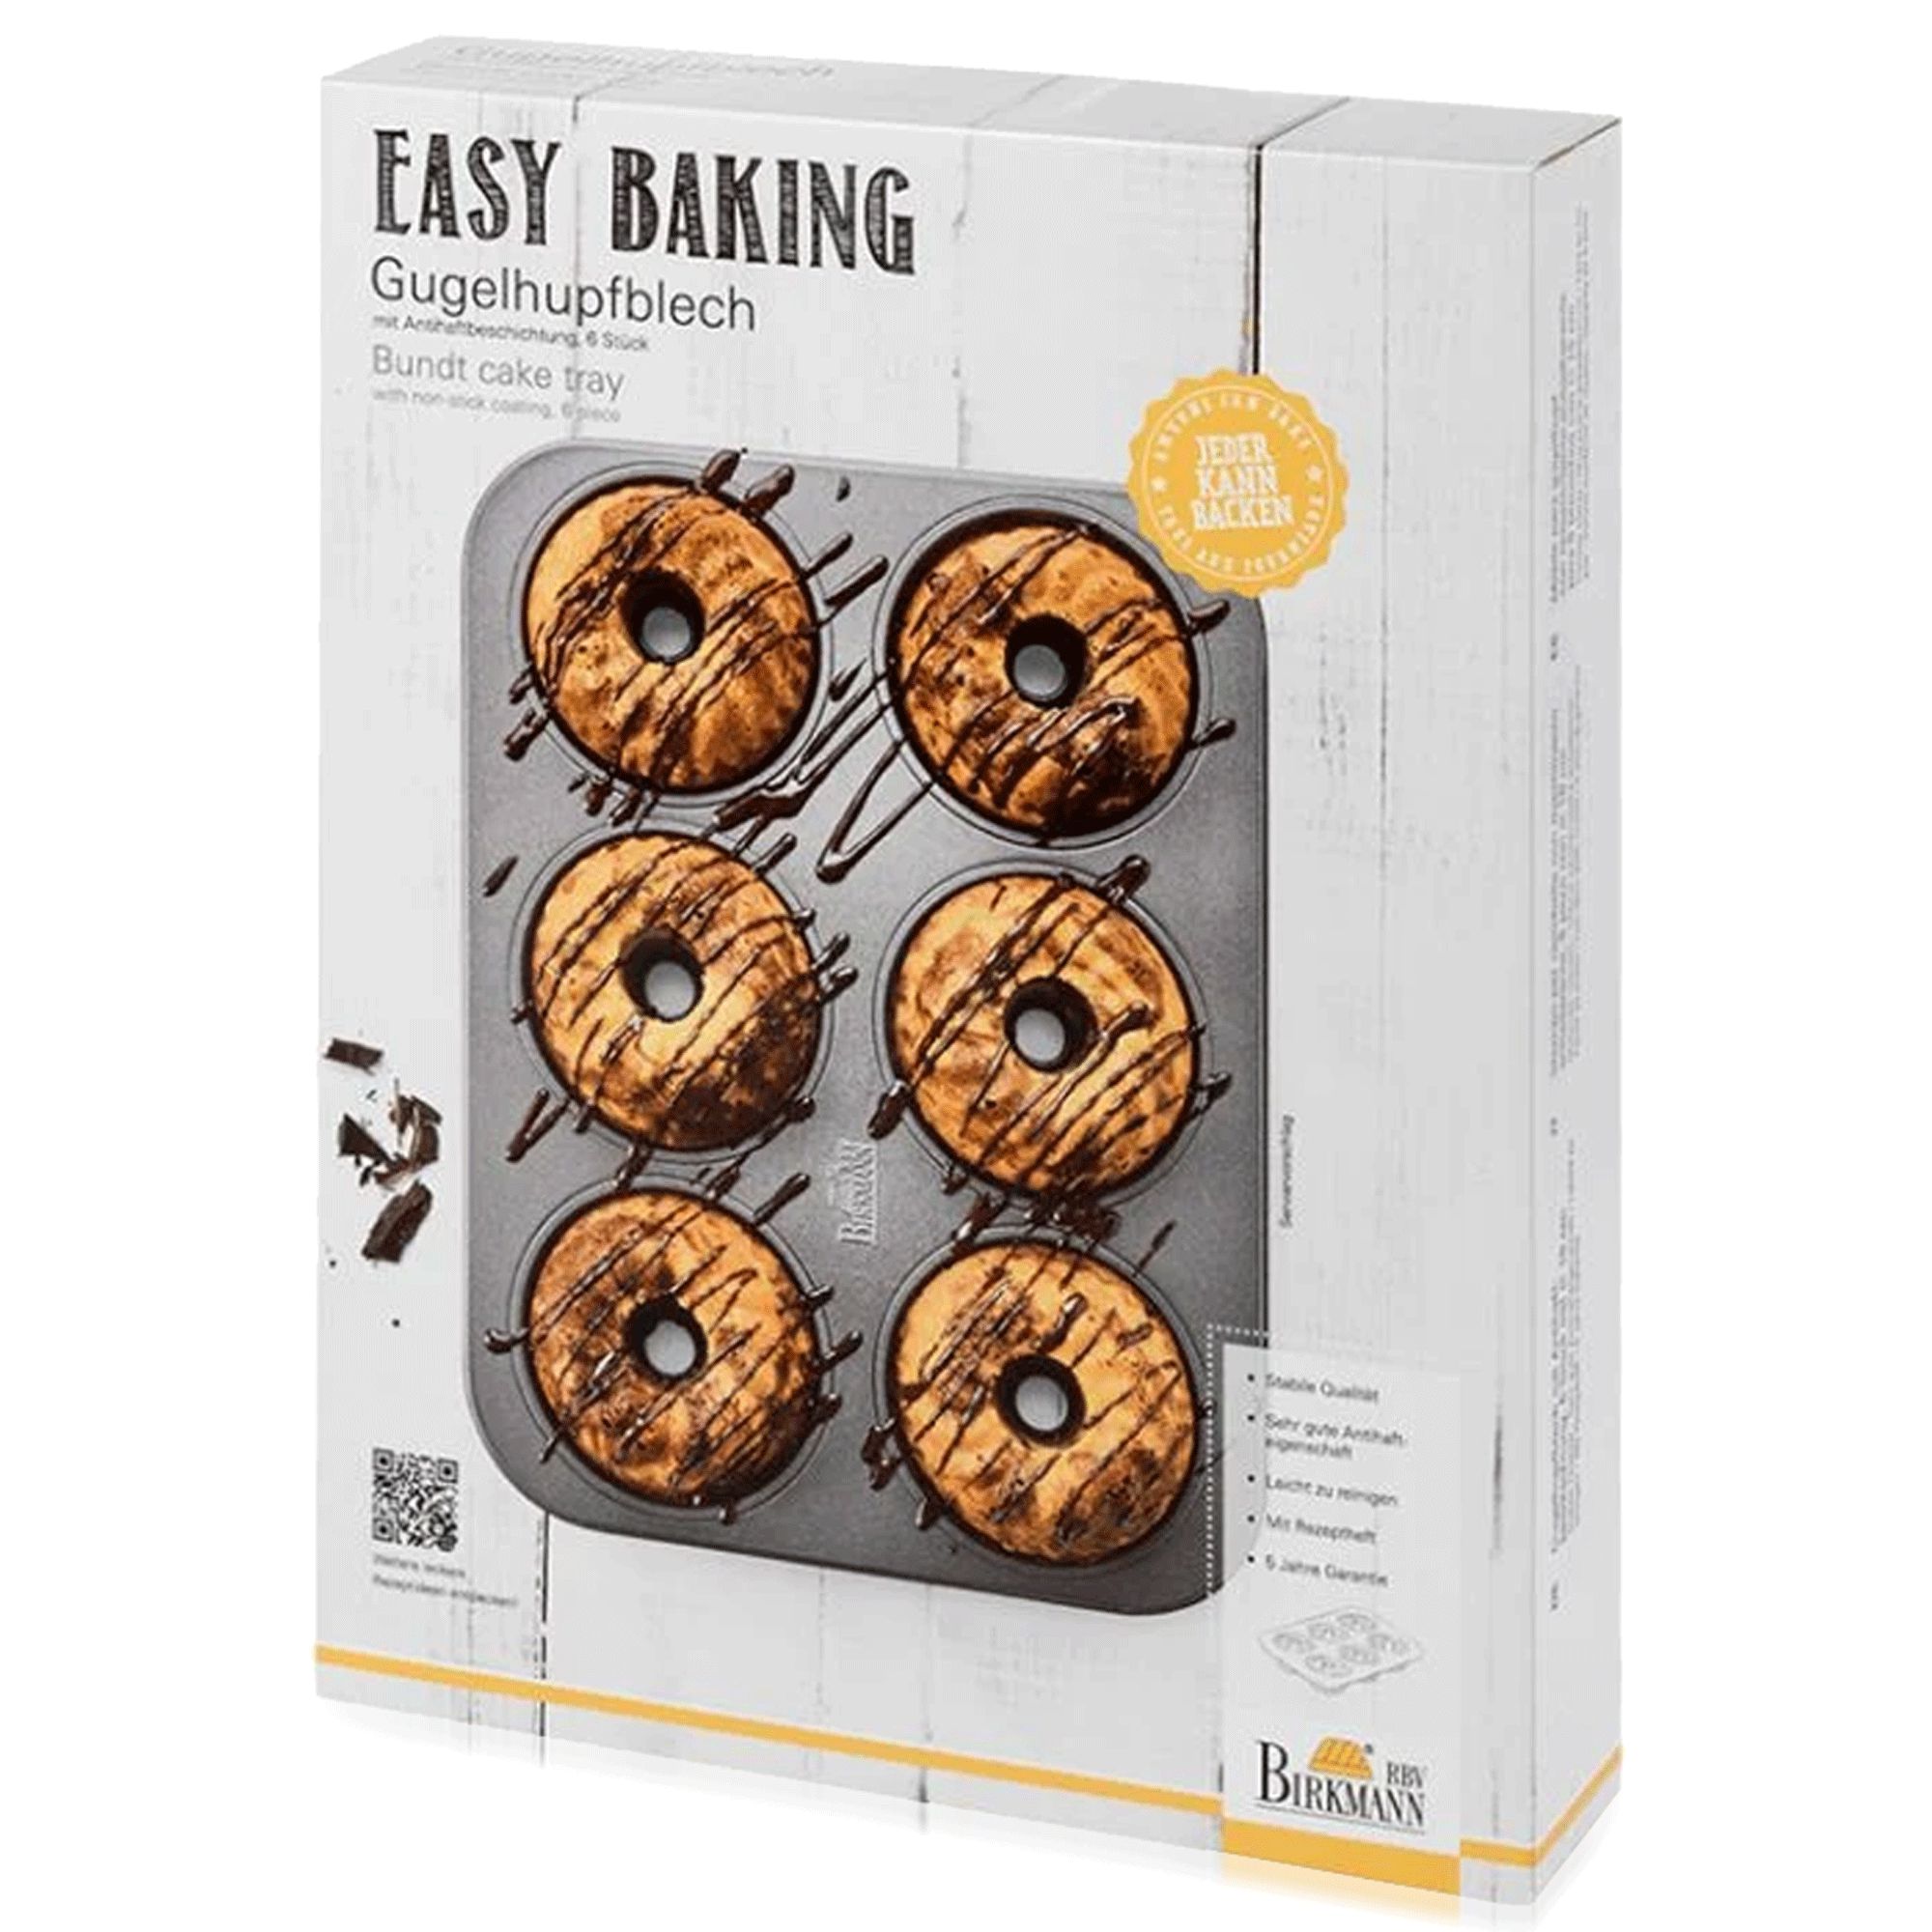 RBV Birkmann - bund cake tin / 6pcs - Easy Baking